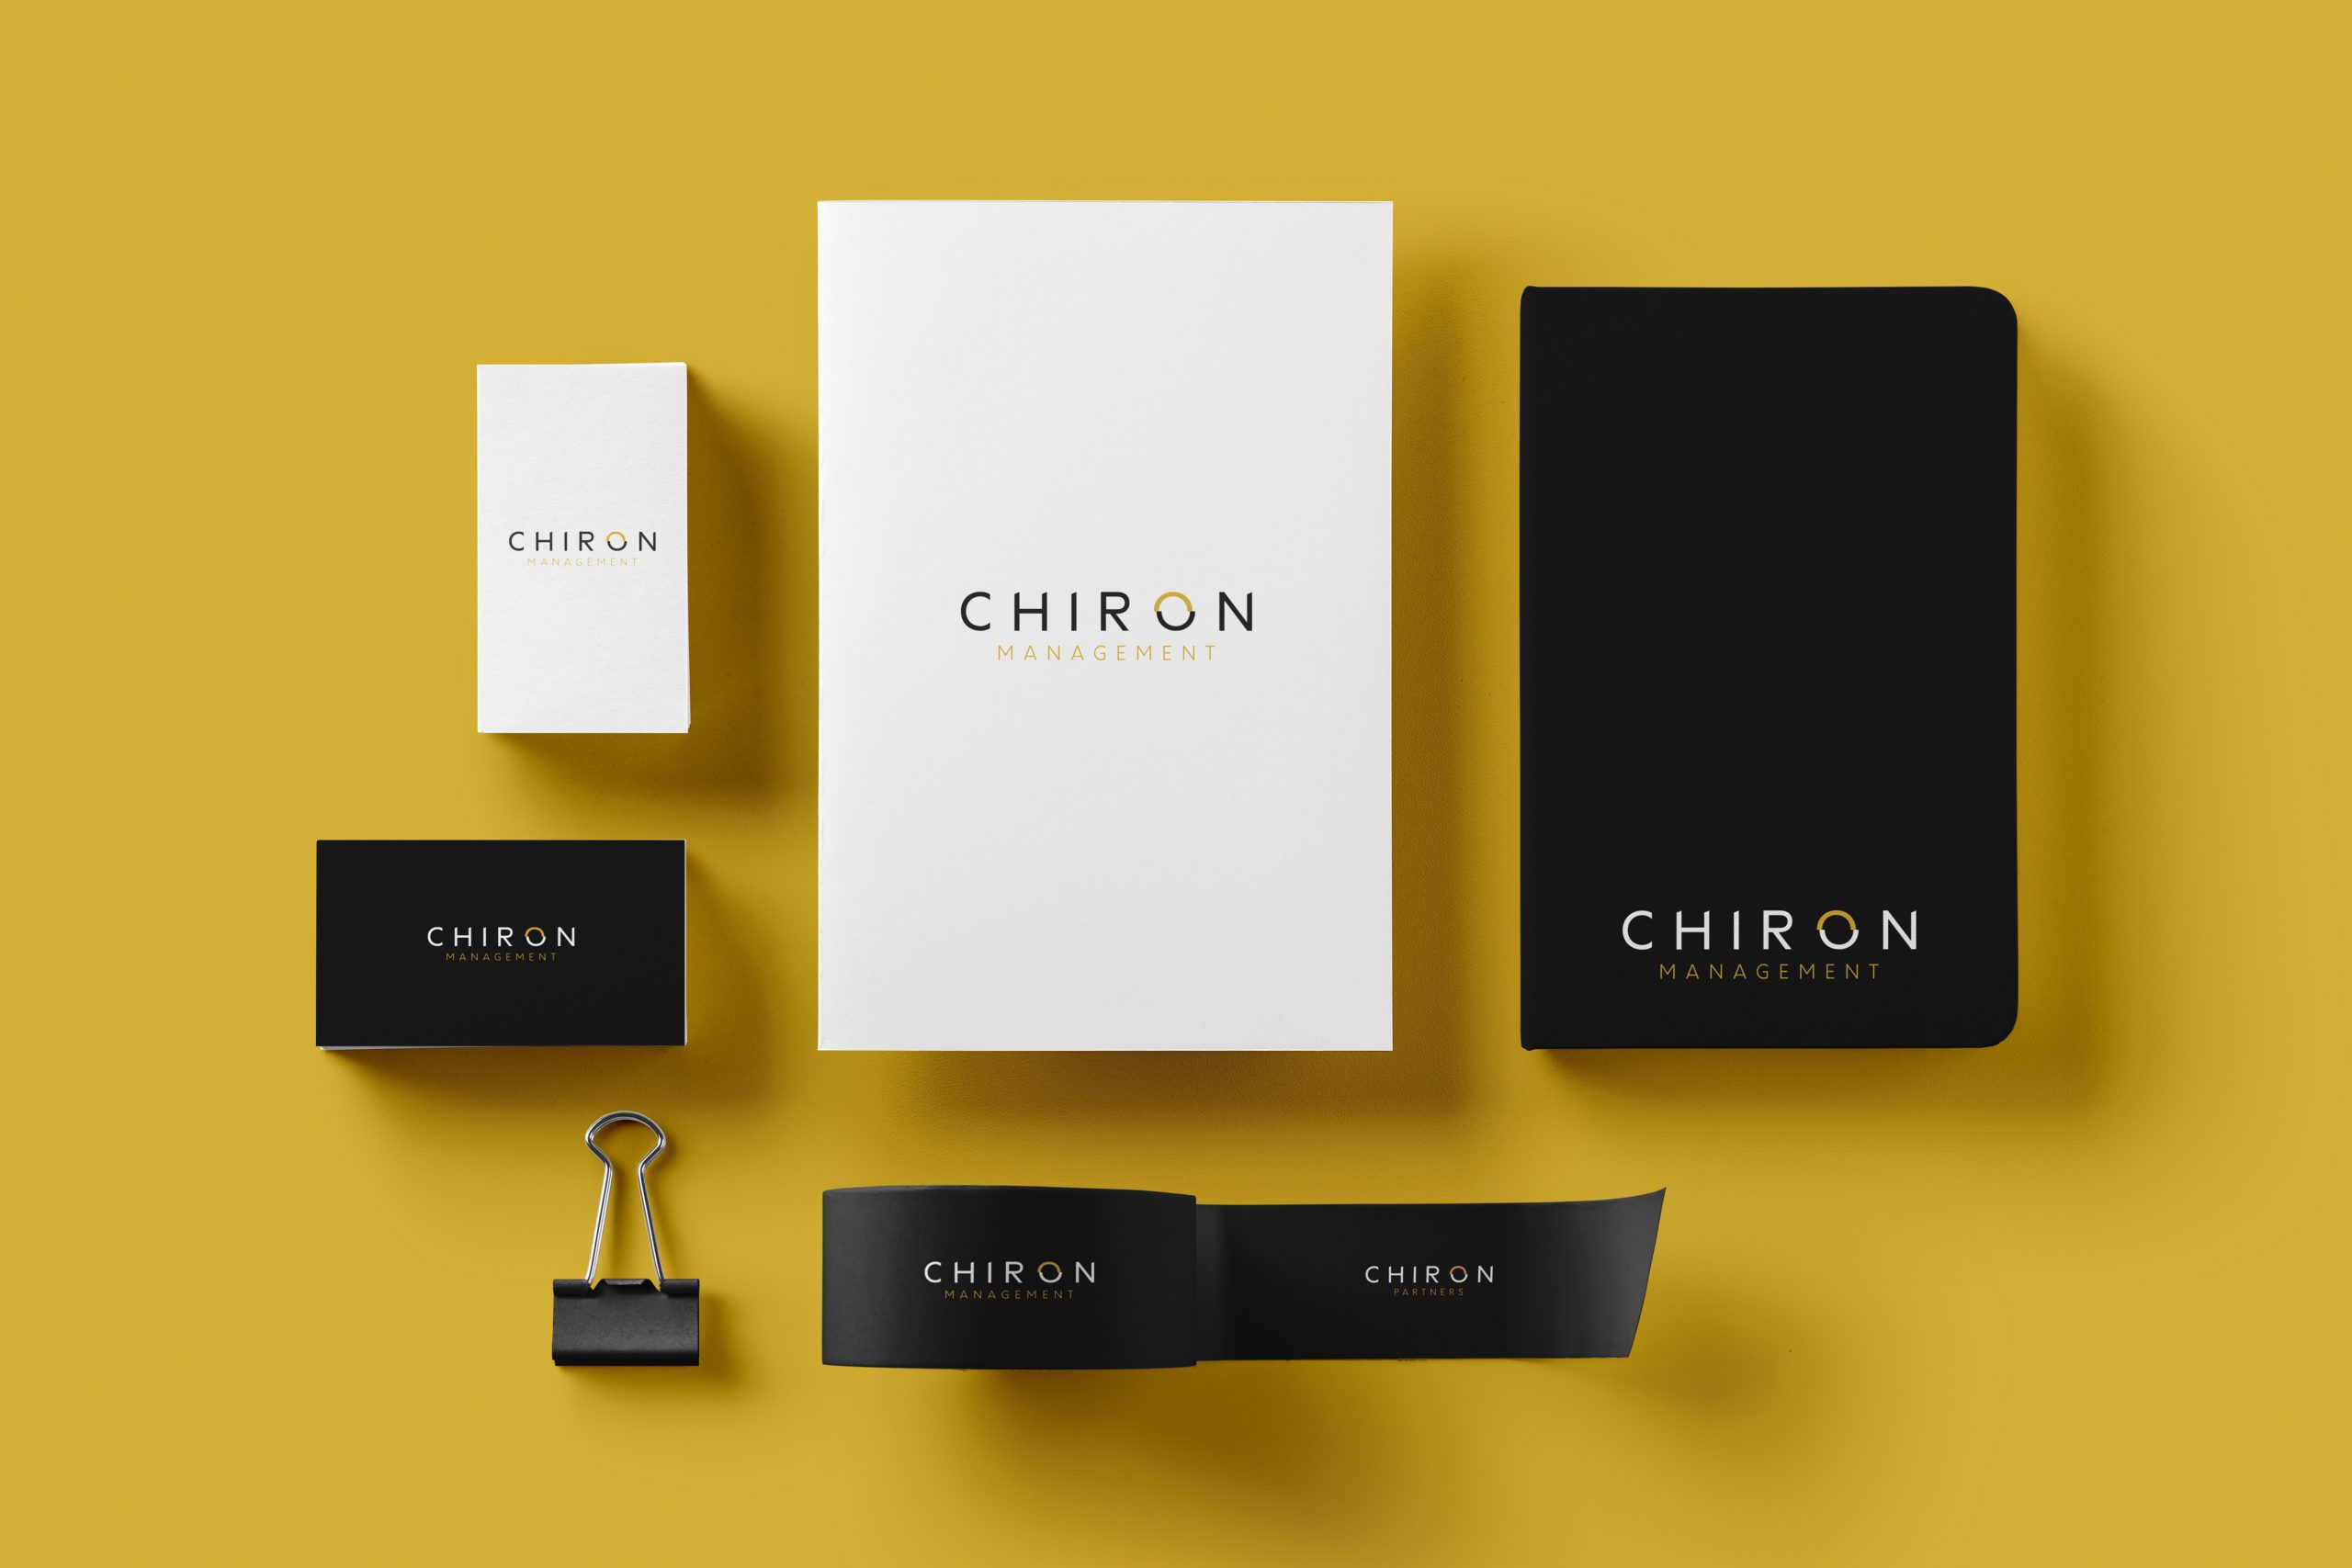 Chiron Partners stationery set on yellow background